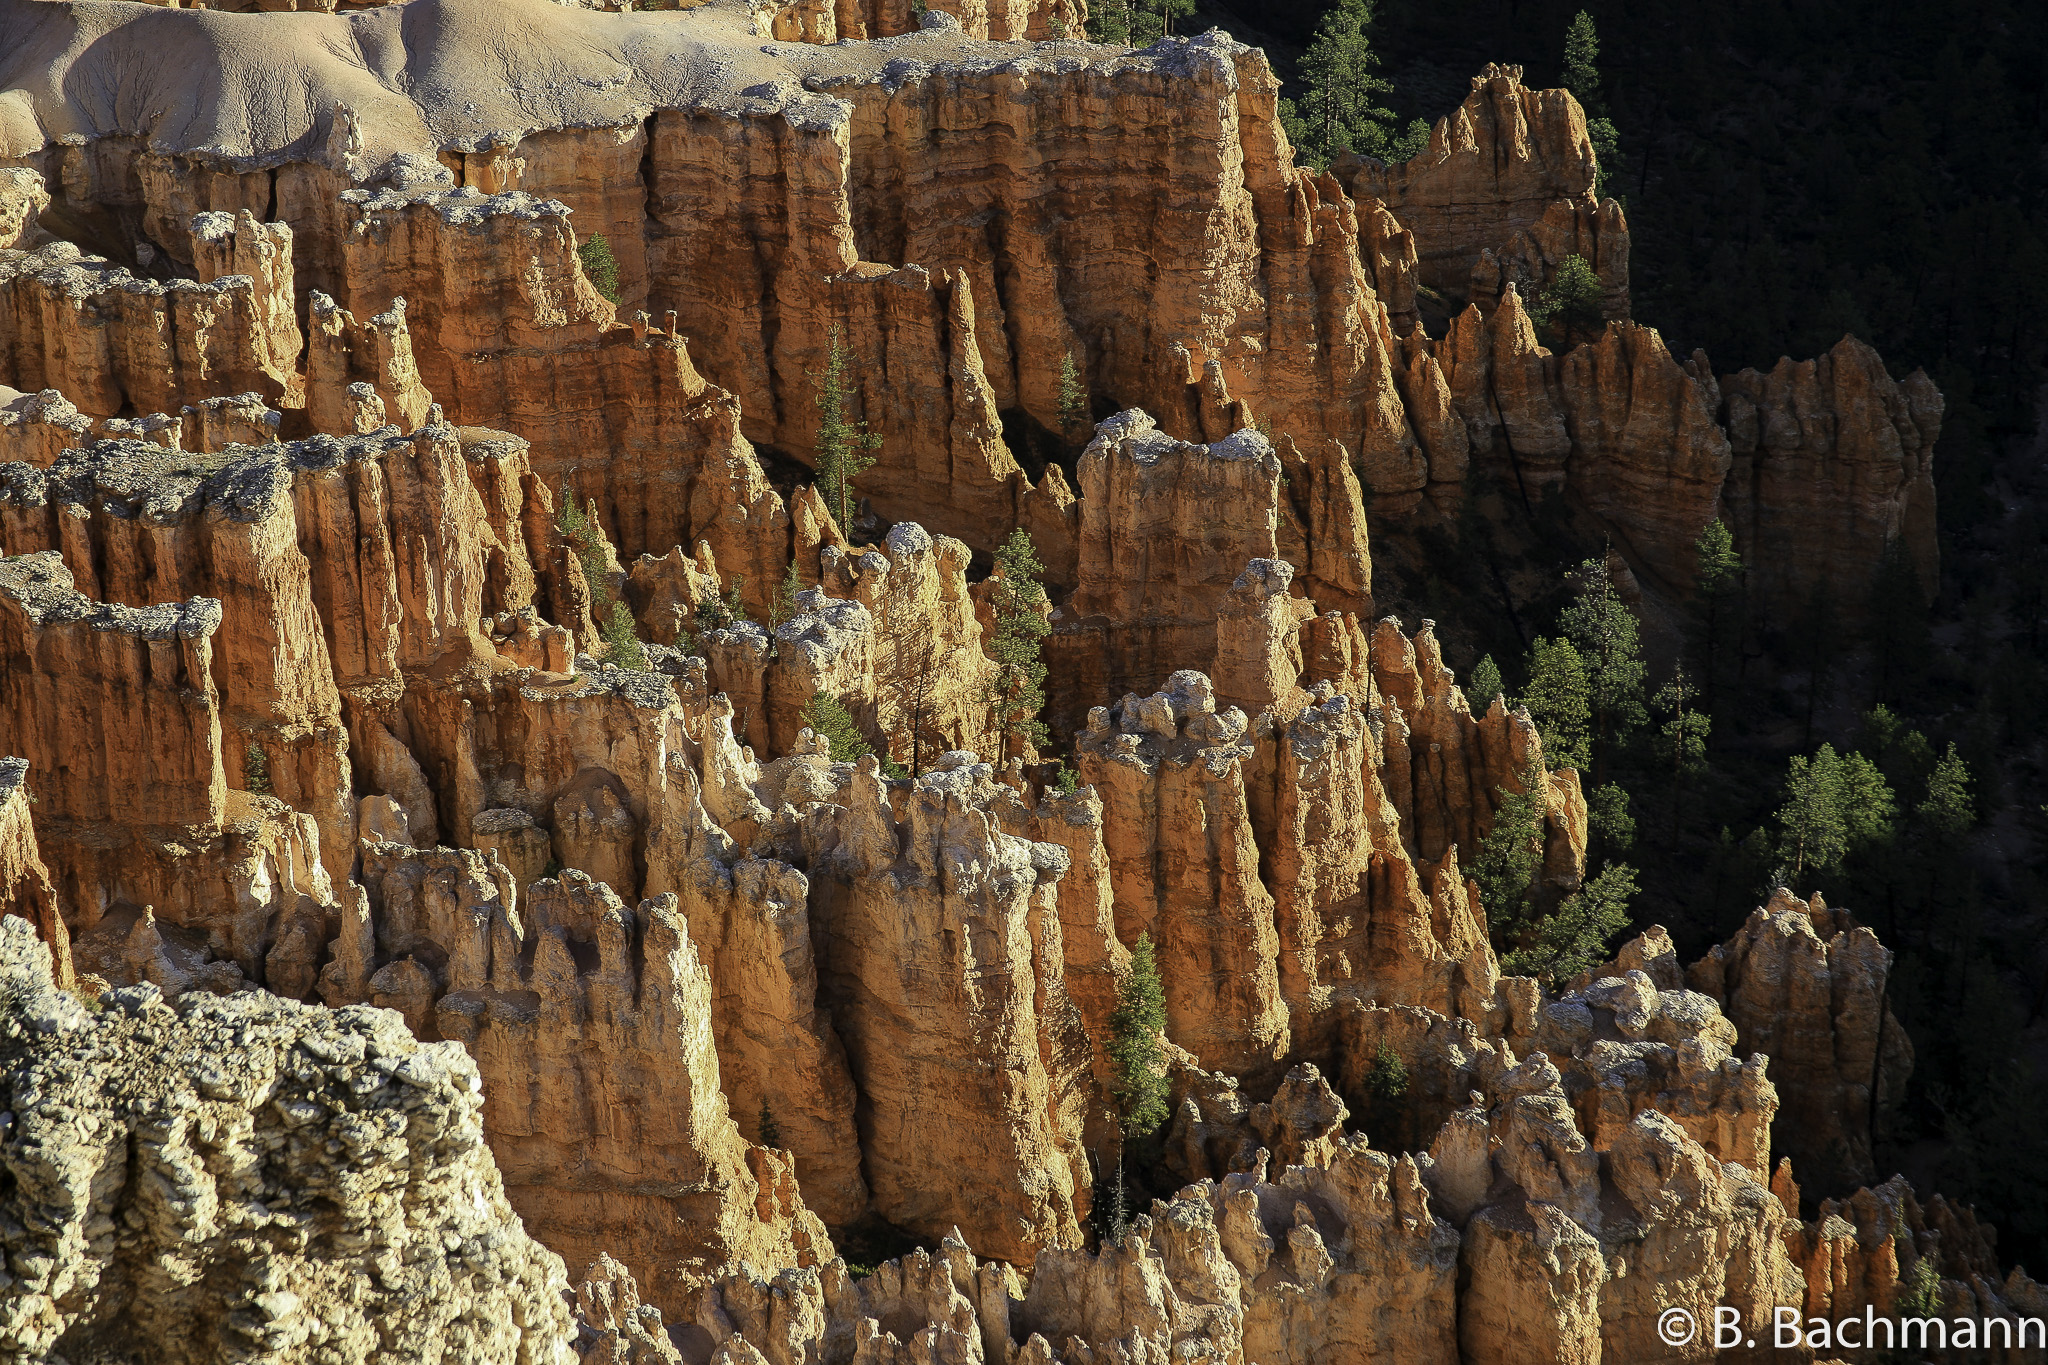 Bryce-Canyon_0013.jpg